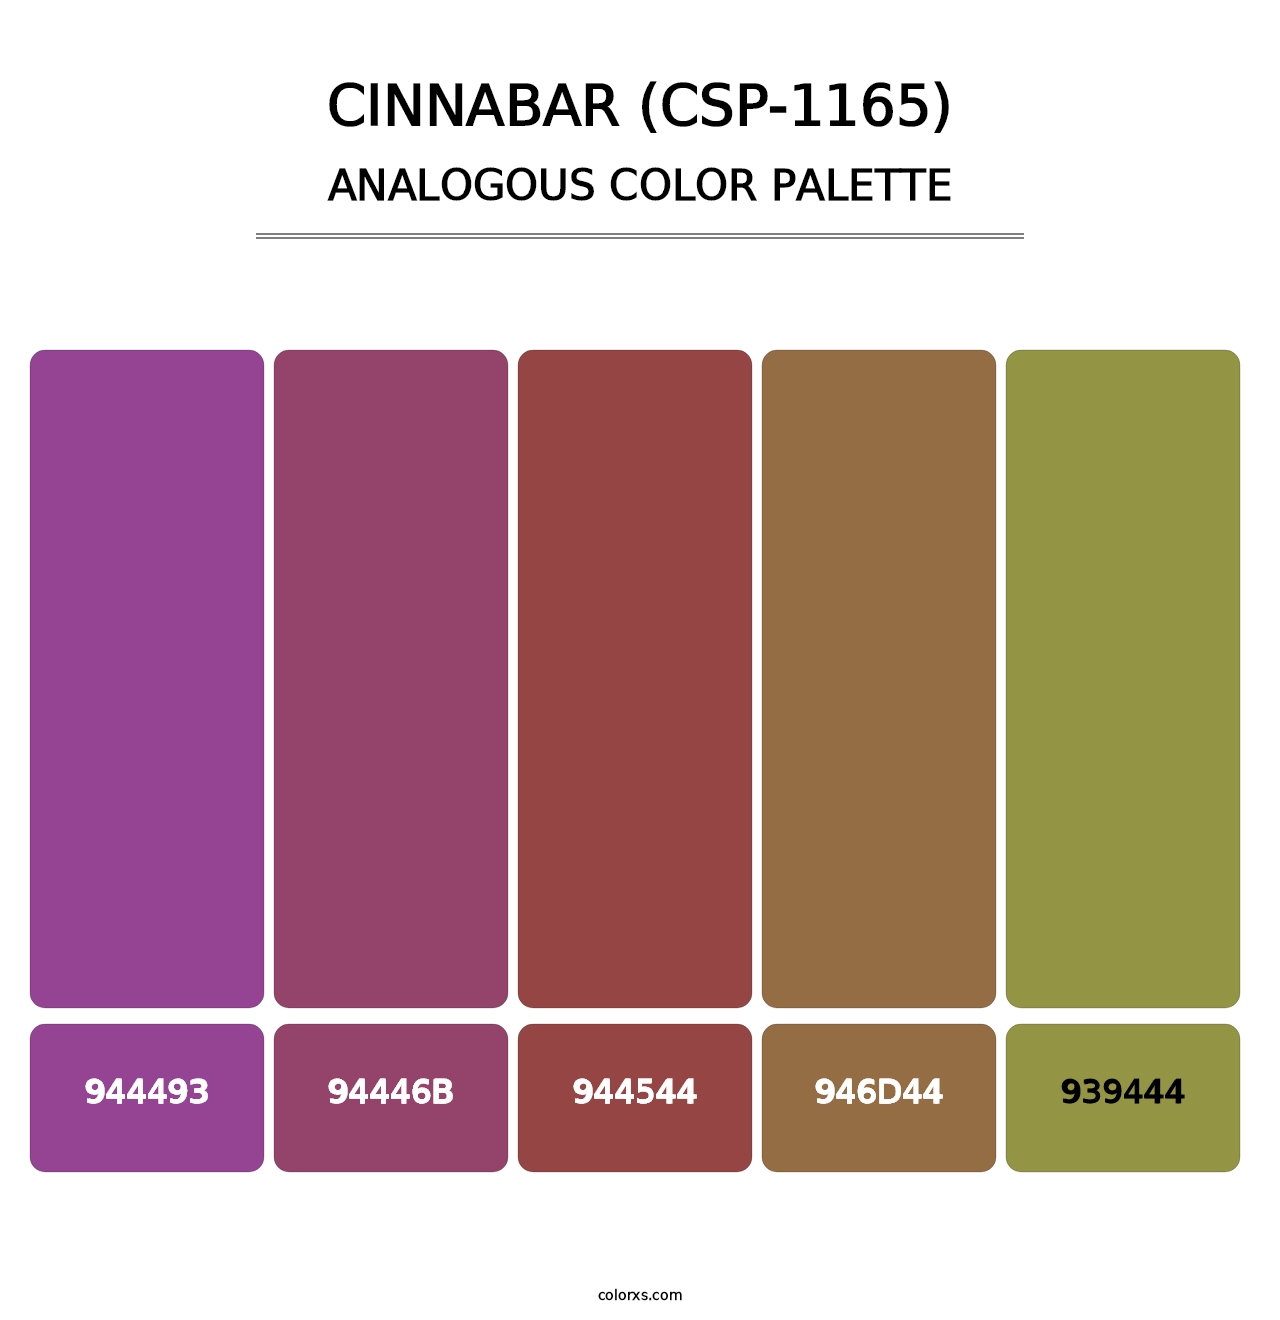 Cinnabar (CSP-1165) - Analogous Color Palette